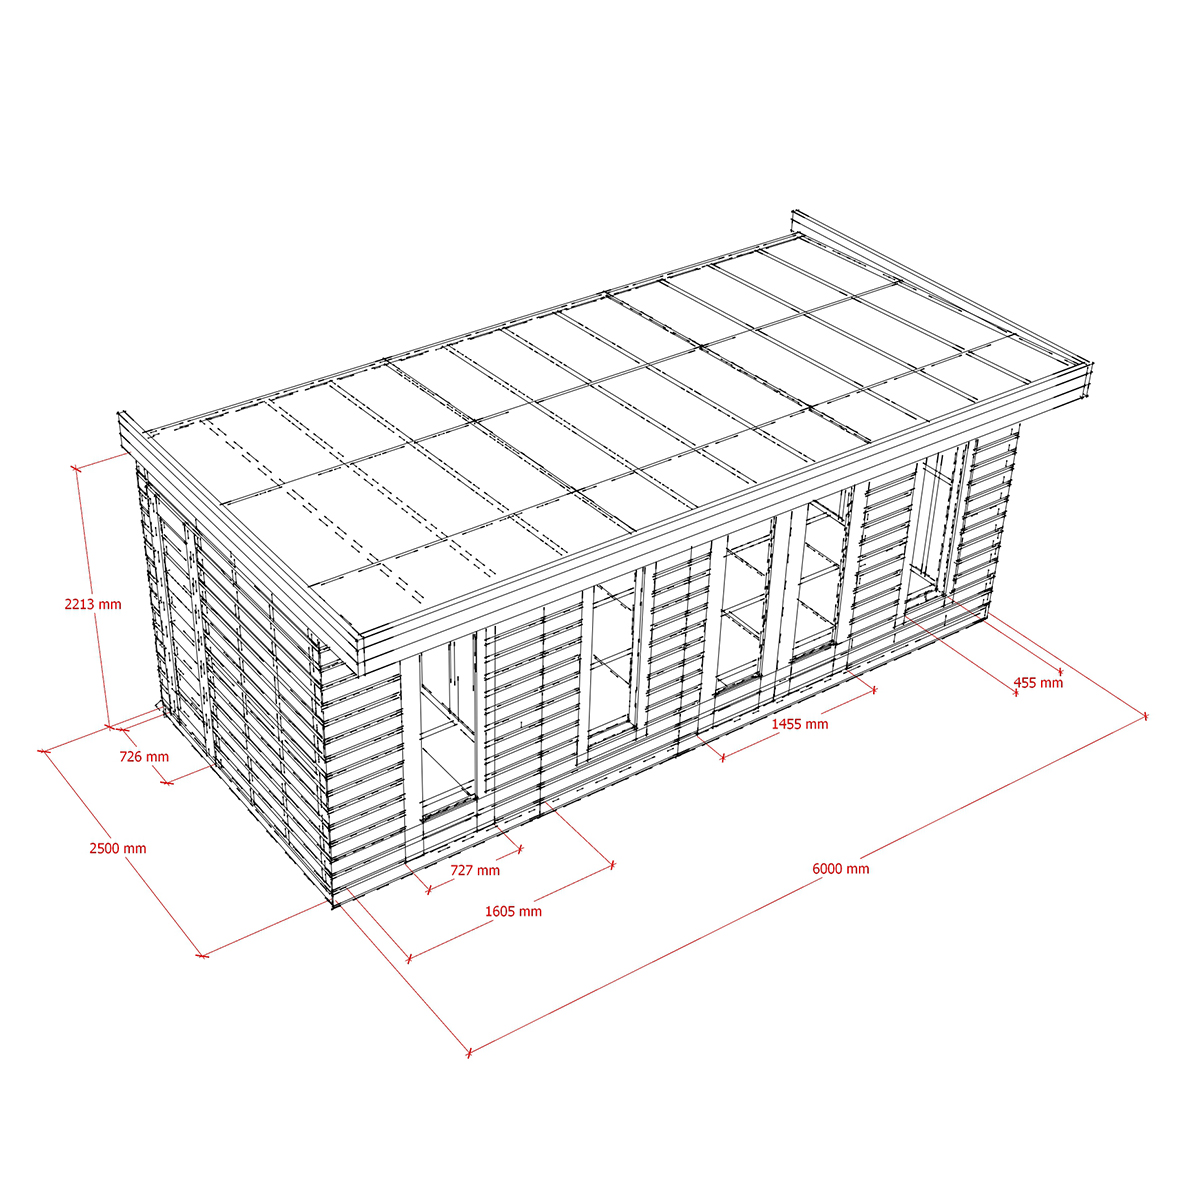 Exterior dimensions of unique summerhouse garden room